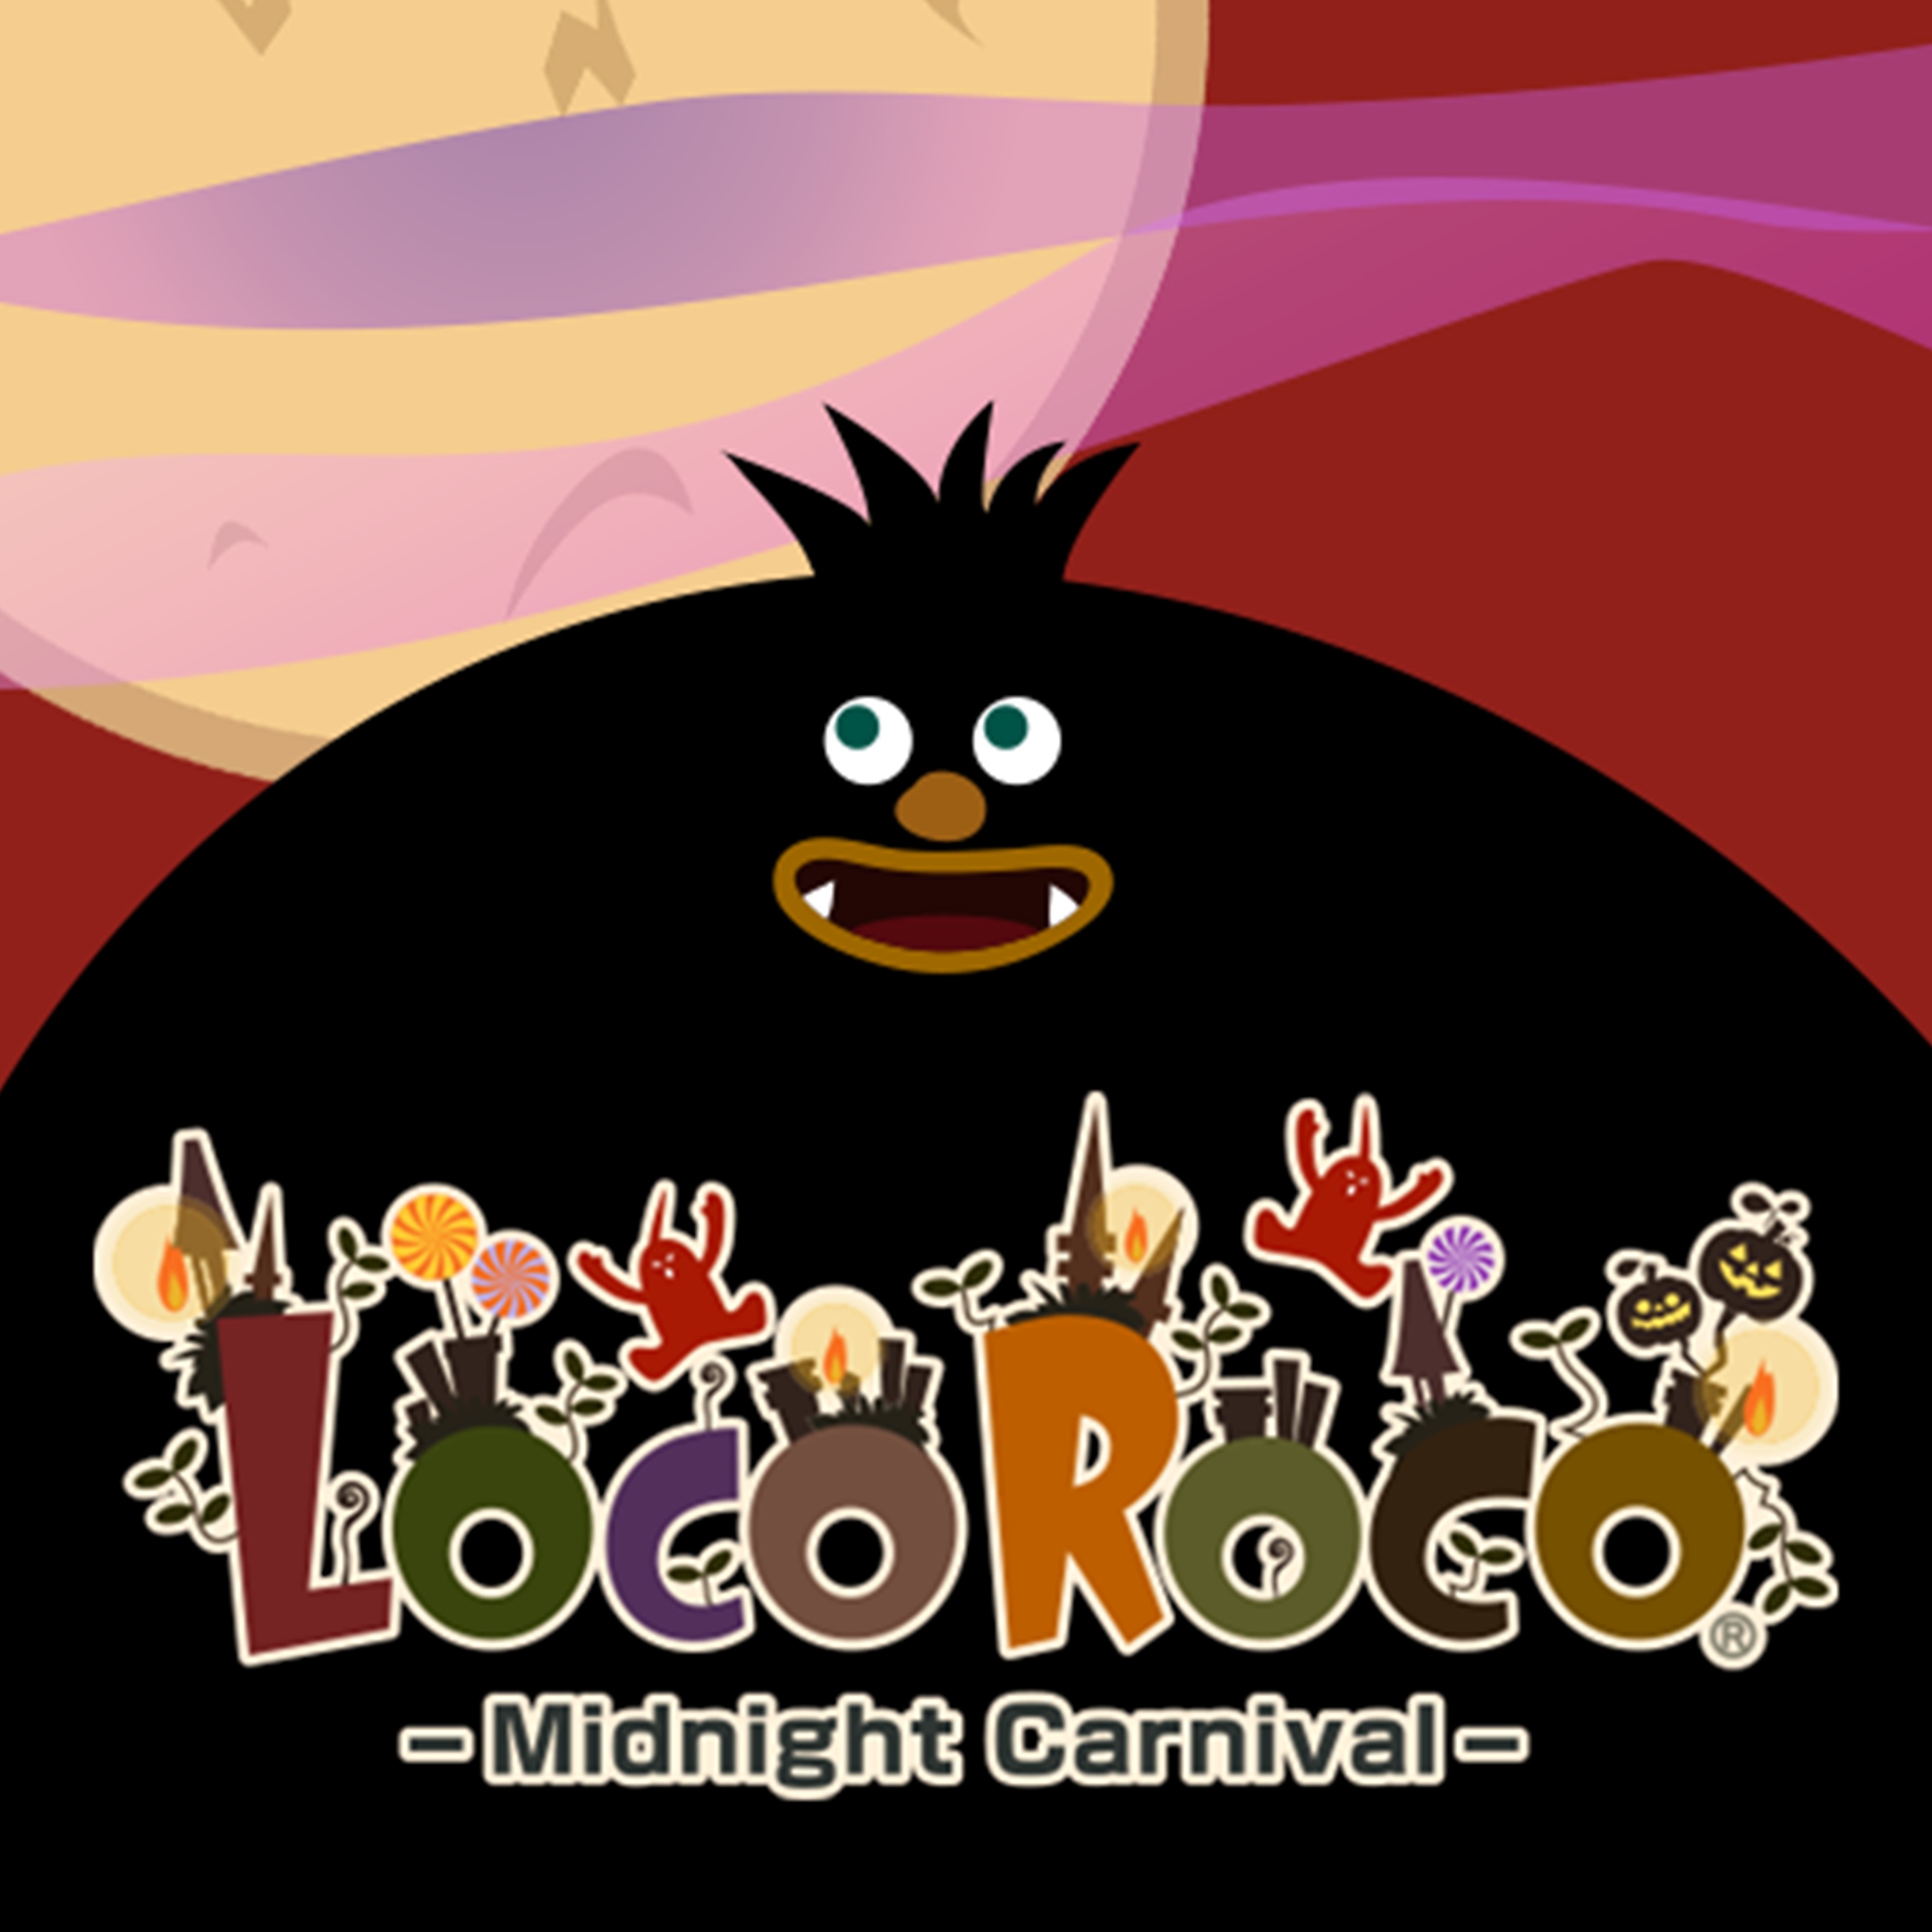 LocoRoco Midnight Carnival - Illustration montrant un personnage cartoon de couleur noire